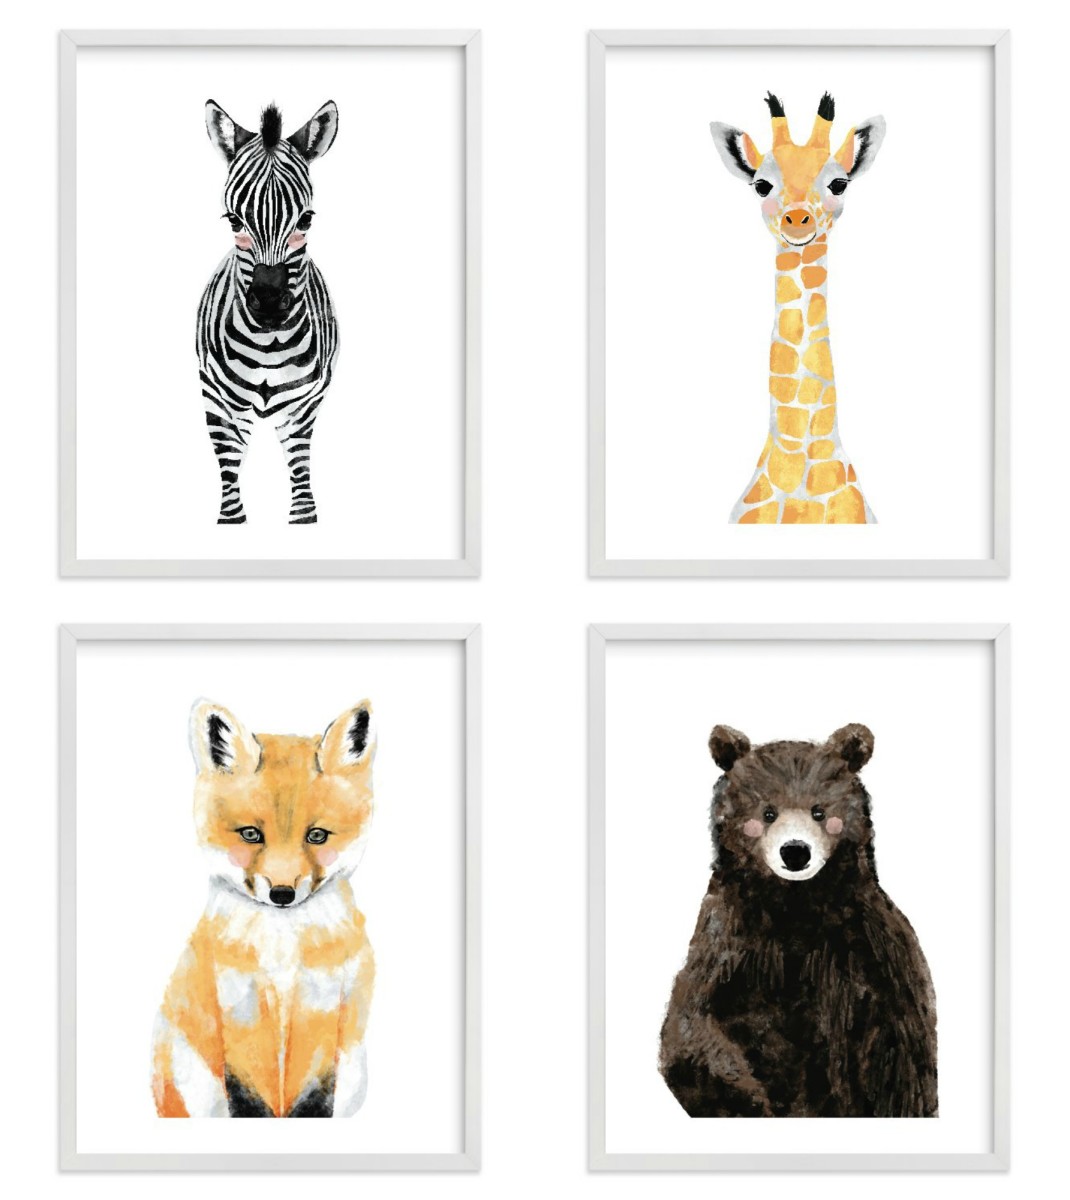 Baby Animal Prints on Minted.com